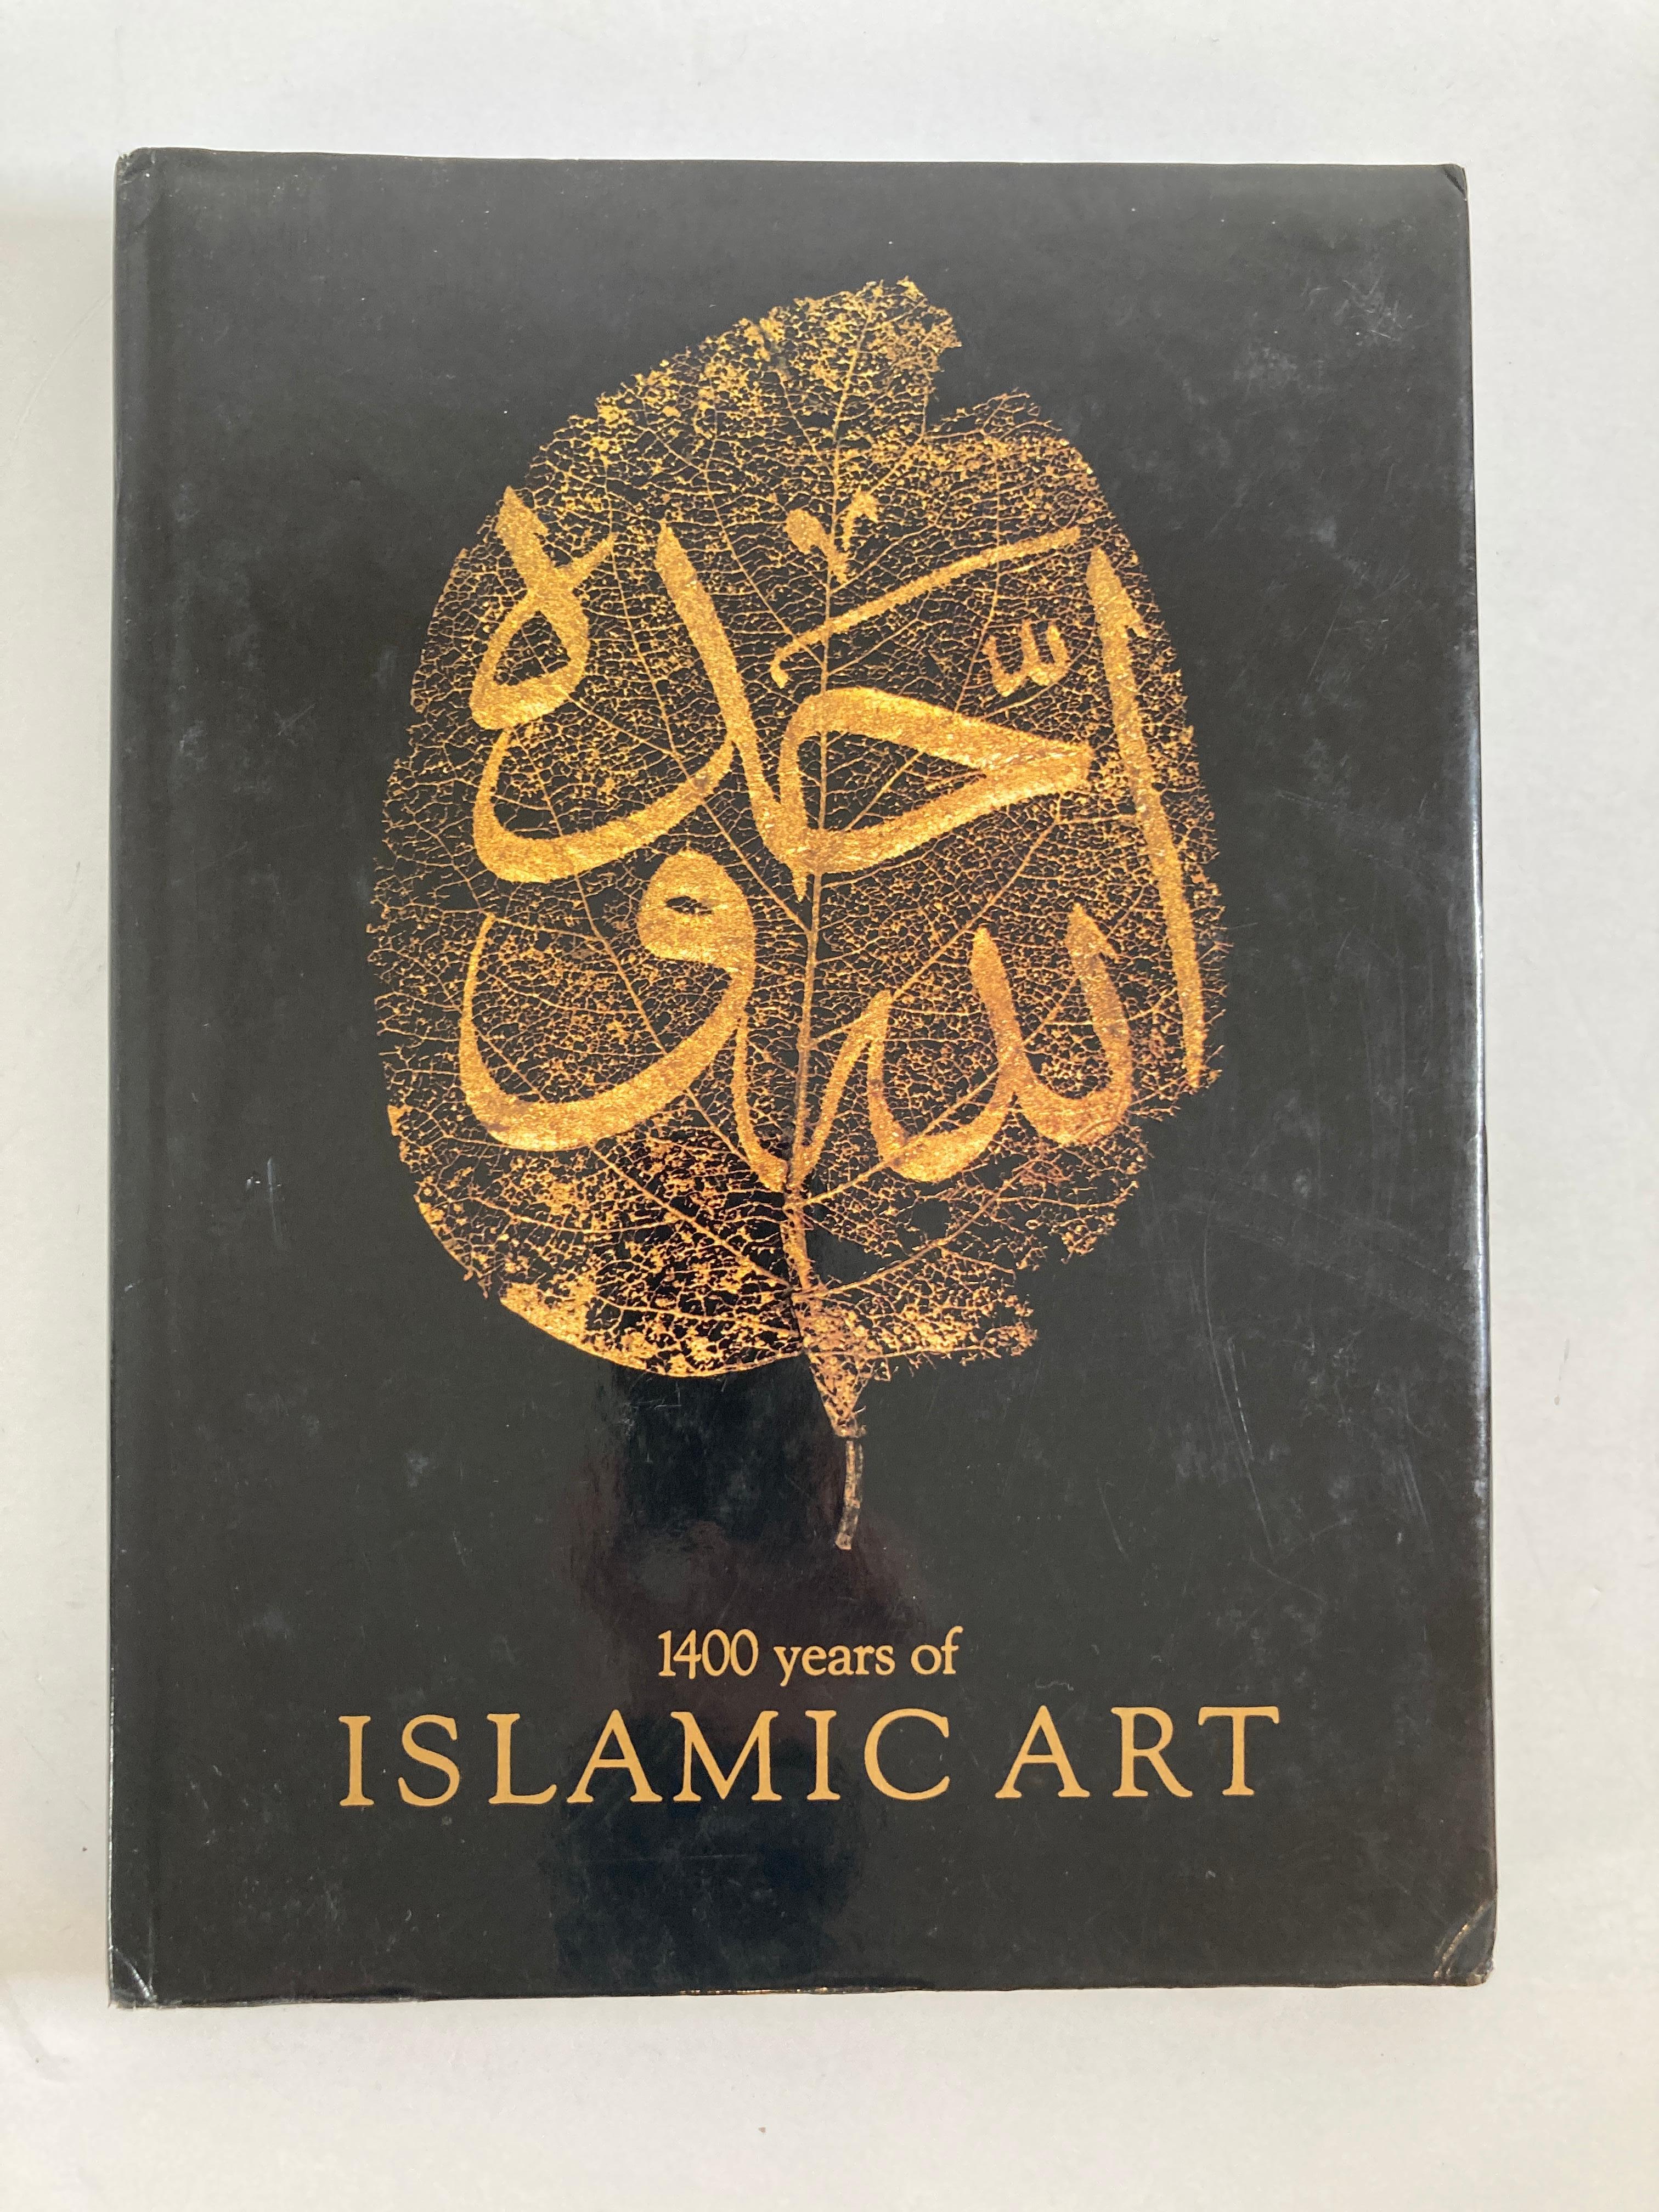 1400 Years of Islamic Art: A descriptive catalogue hardcover.
January 1, 1981
by Geza Fehervari (Author), Yasin H. Safadi (Author)
Publisher: Khalili Gallery; First Edition
London Khalili Gallery, 
165 colour illustrations. 
Language: